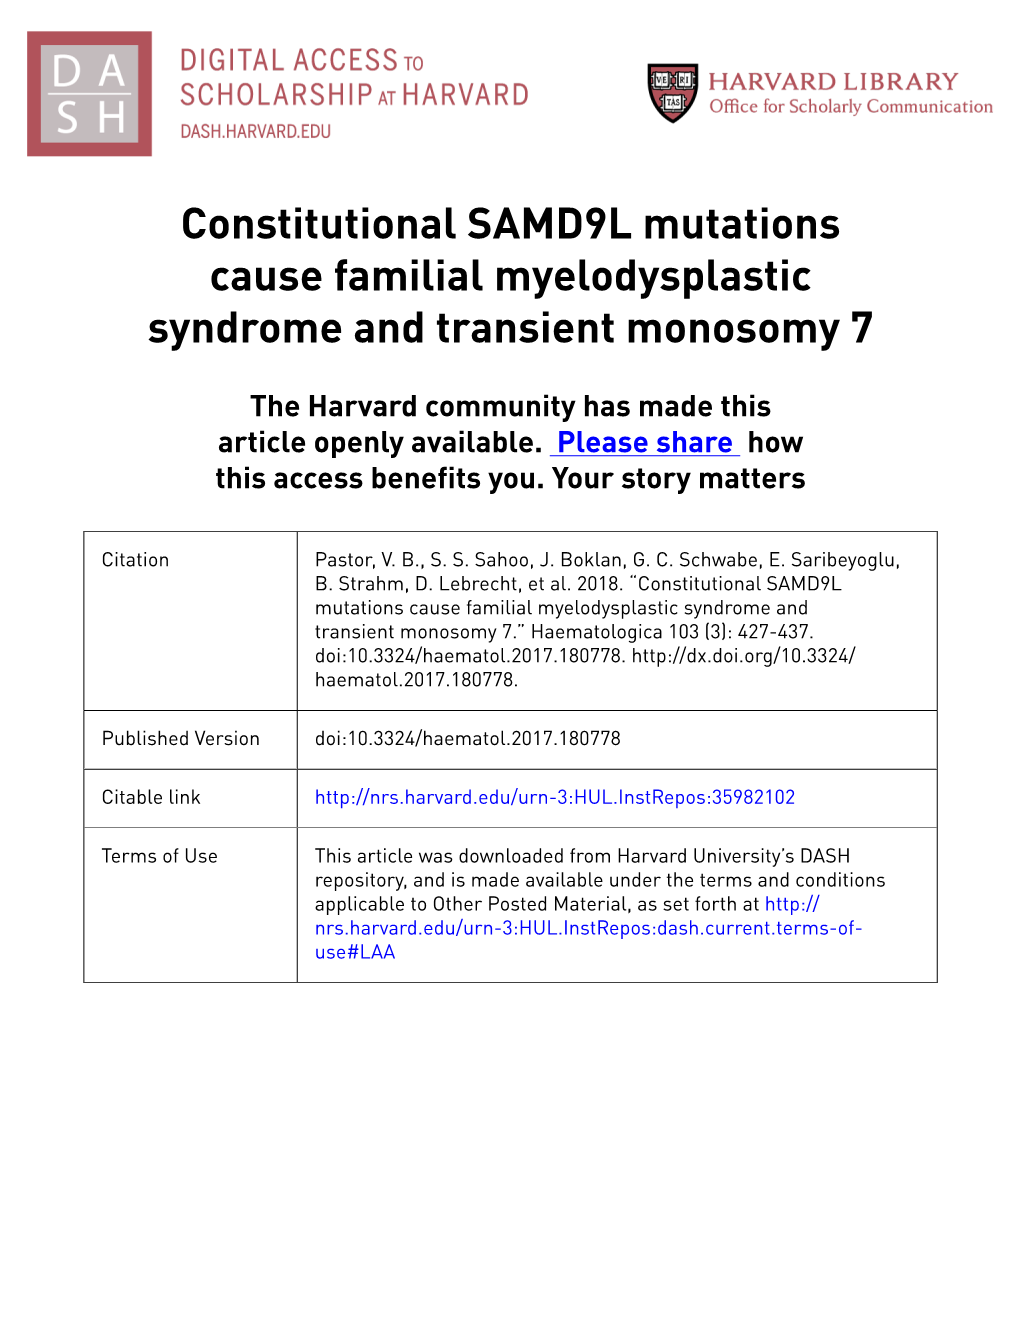 Constitutional SAMD9L Mutations Cause Familial Myelodysplastic Syndrome and Transient Monosomy 7